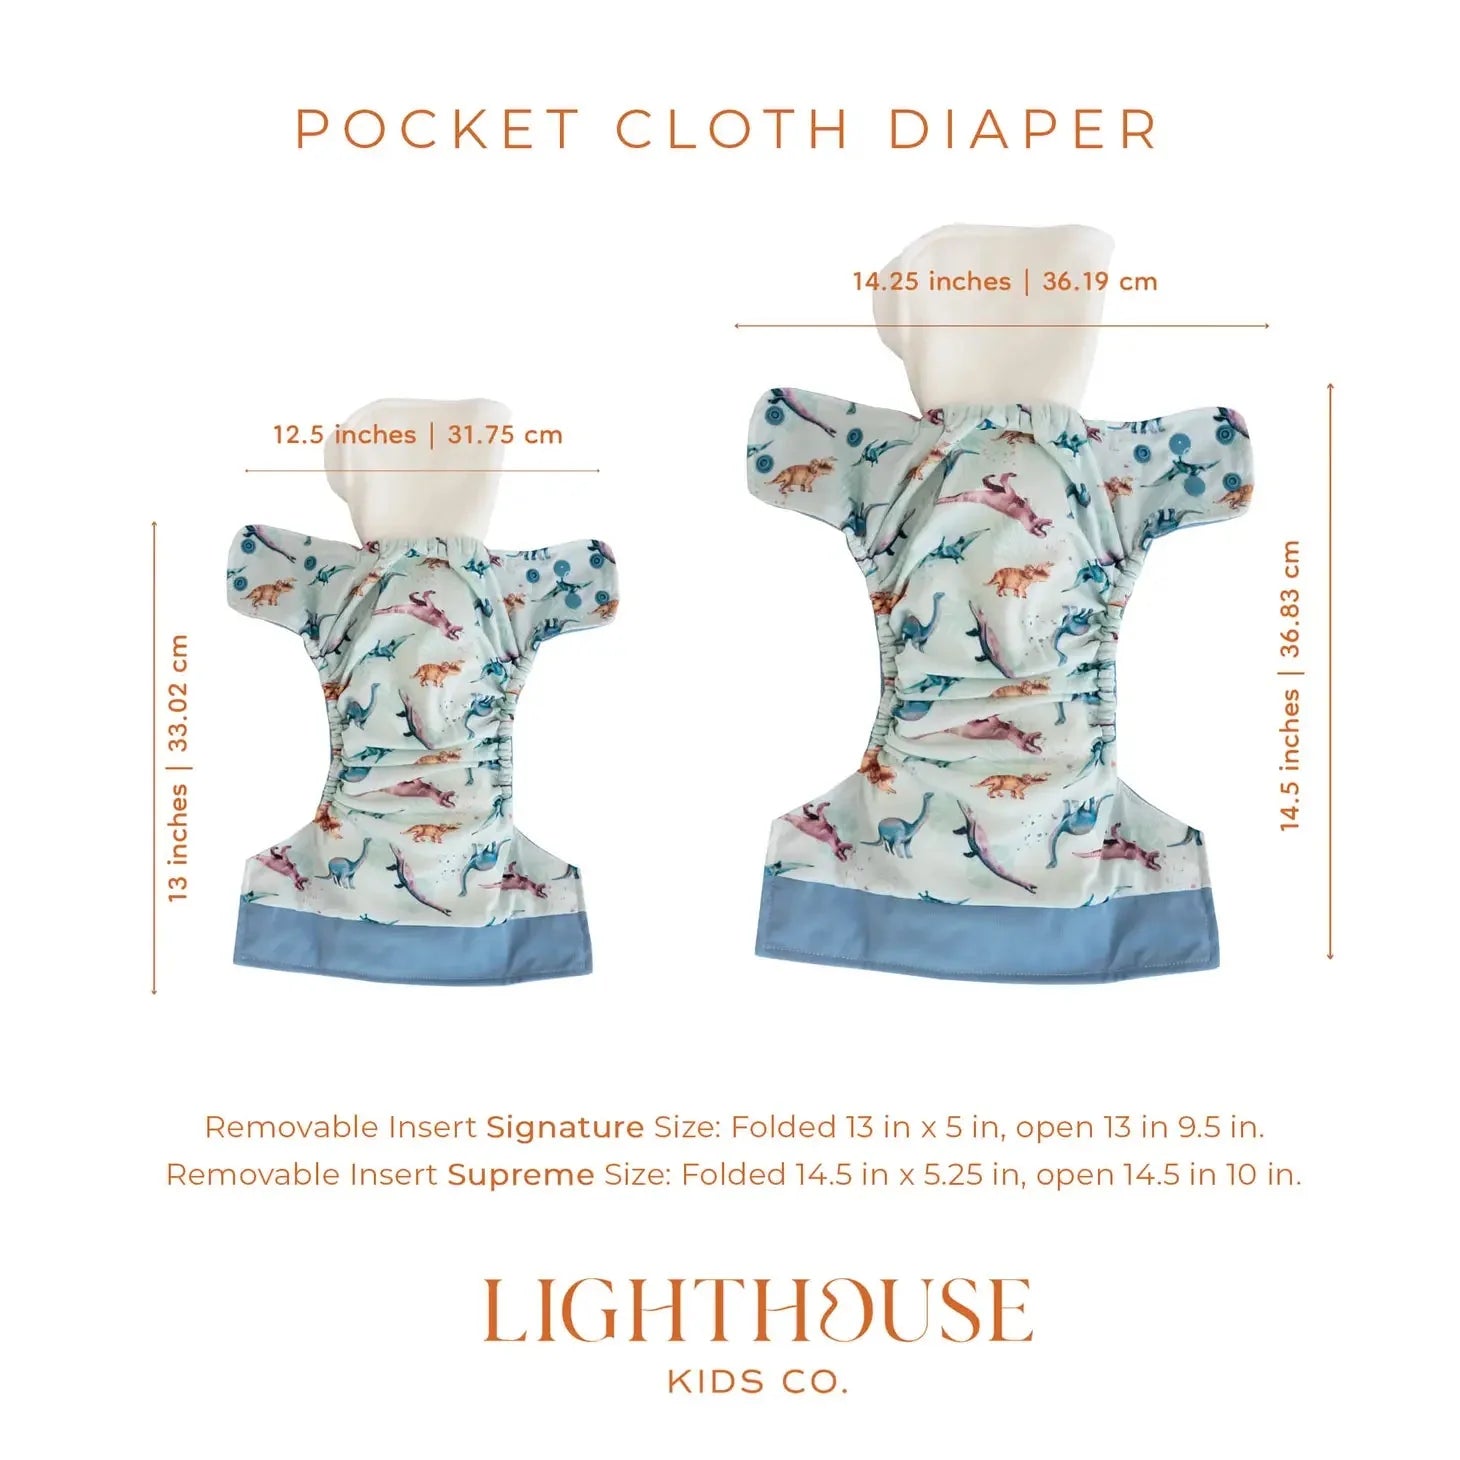 Lighthouse Kids Co. Pocket Cloth Diaper Size 2 - Supreme Lighthouse Kids Co. Pocket Cloth Diaper - Supreme (15-55+lbs)